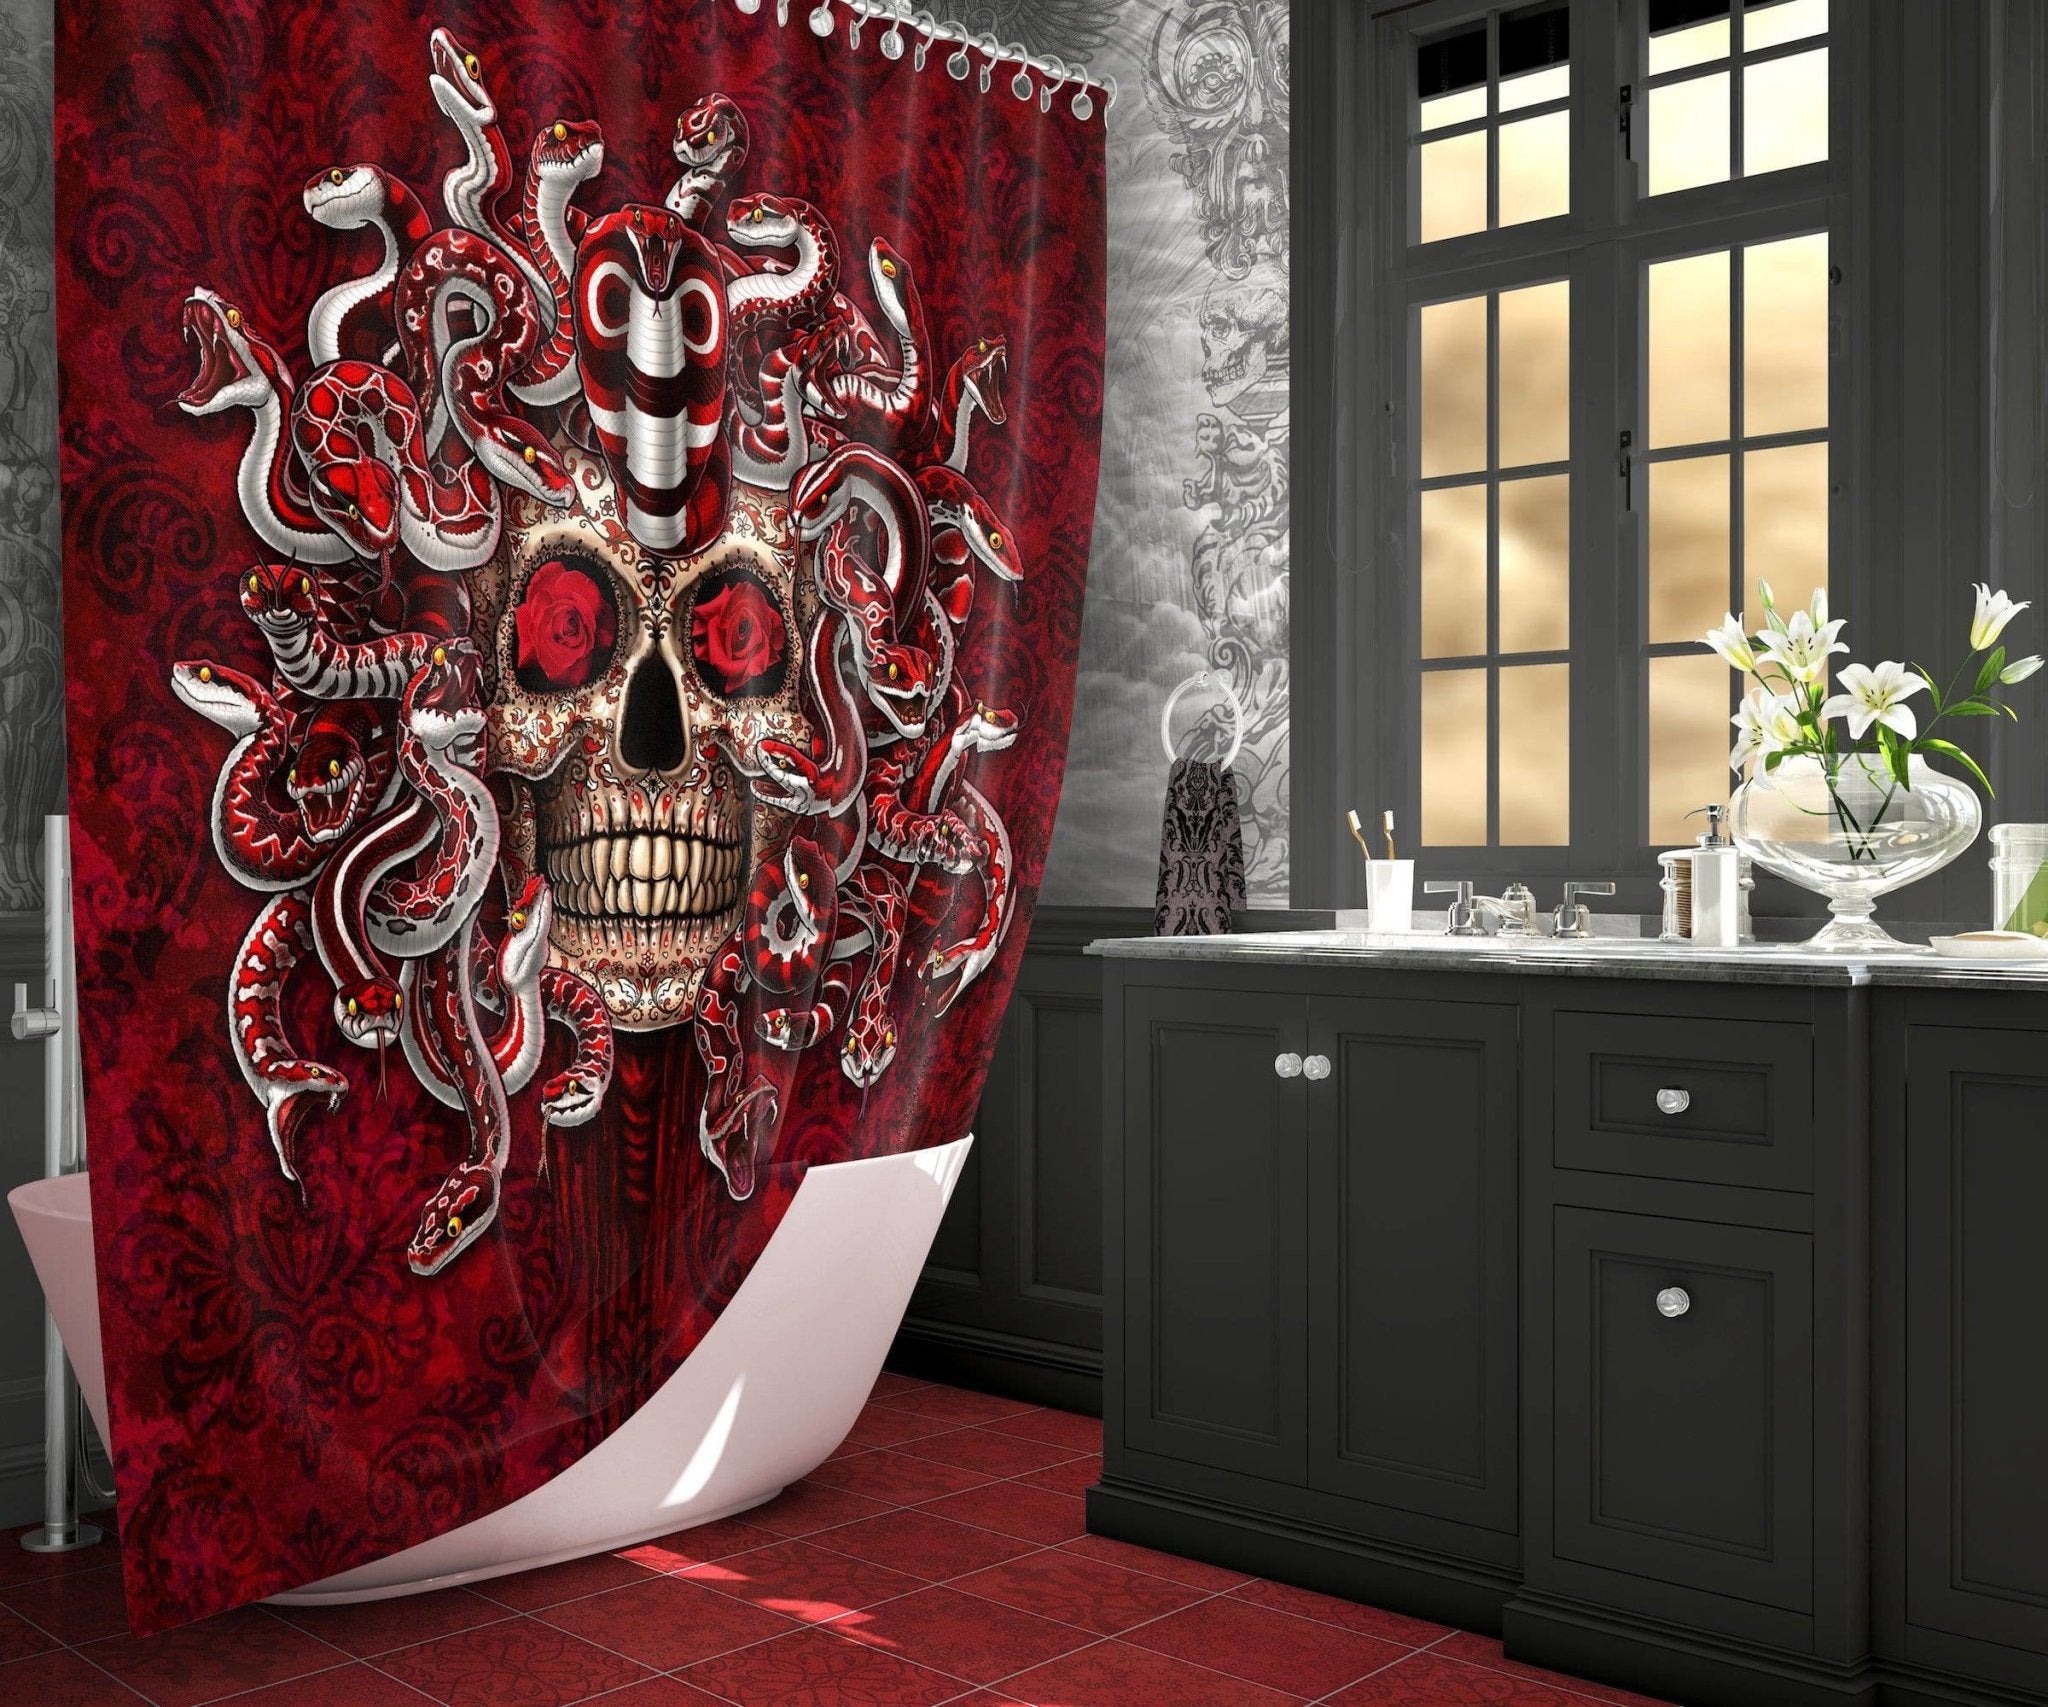 Sugar Skull Shower Curtain, Dia de los Muertos, Day of the Dead, Mexican, Gothic Bathroom Decor - Medusa, Red & White Snakes - Abysm Internal